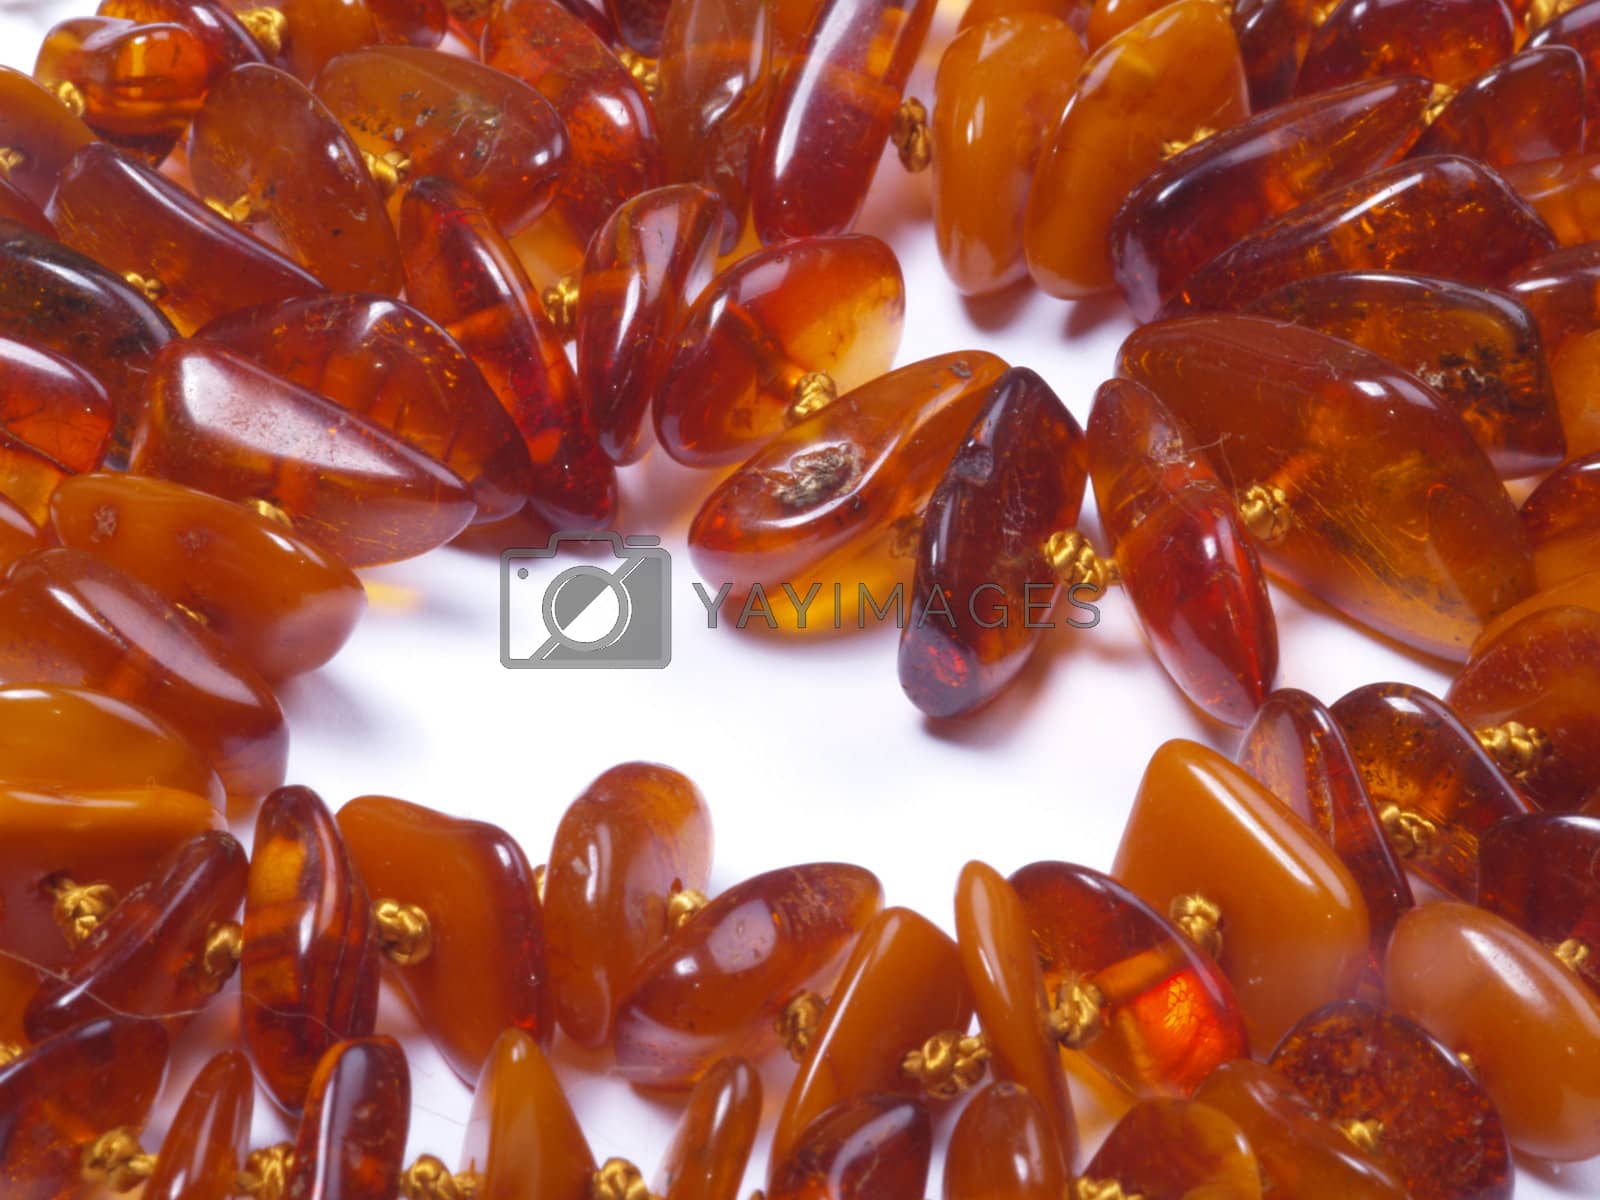 Royalty free image of amber bead by derausdo